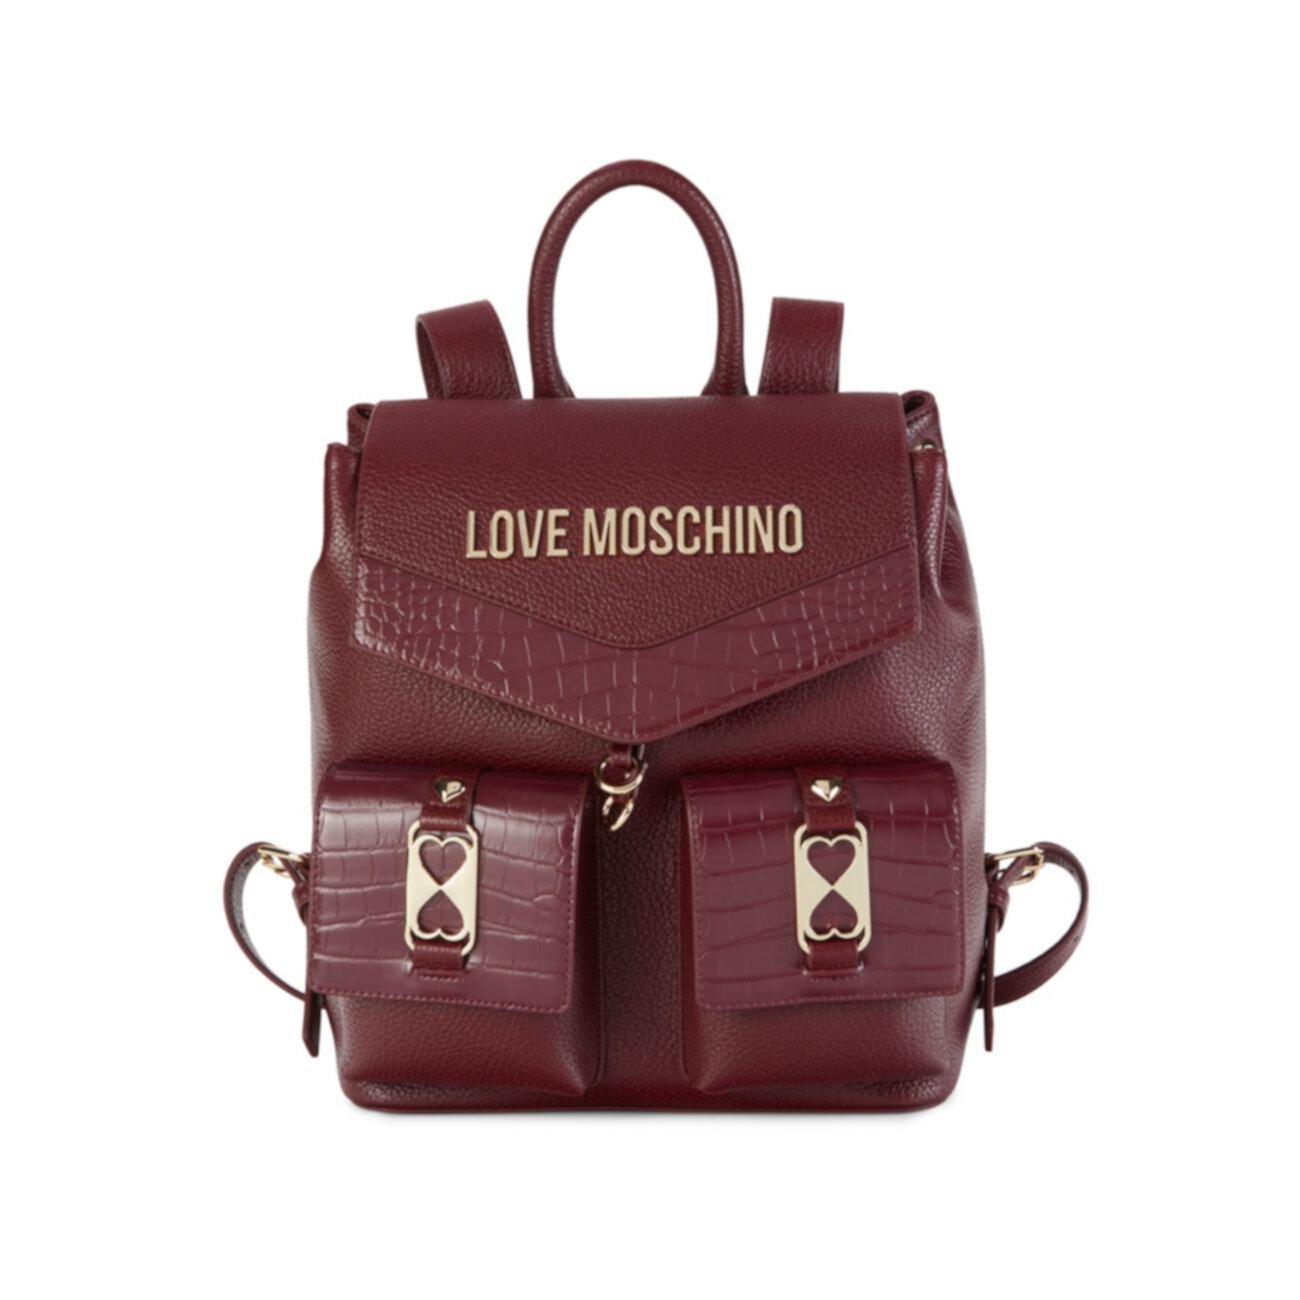 Рюкзак с тисненым логотипом под крокодиловую кожу LOVE Moschino